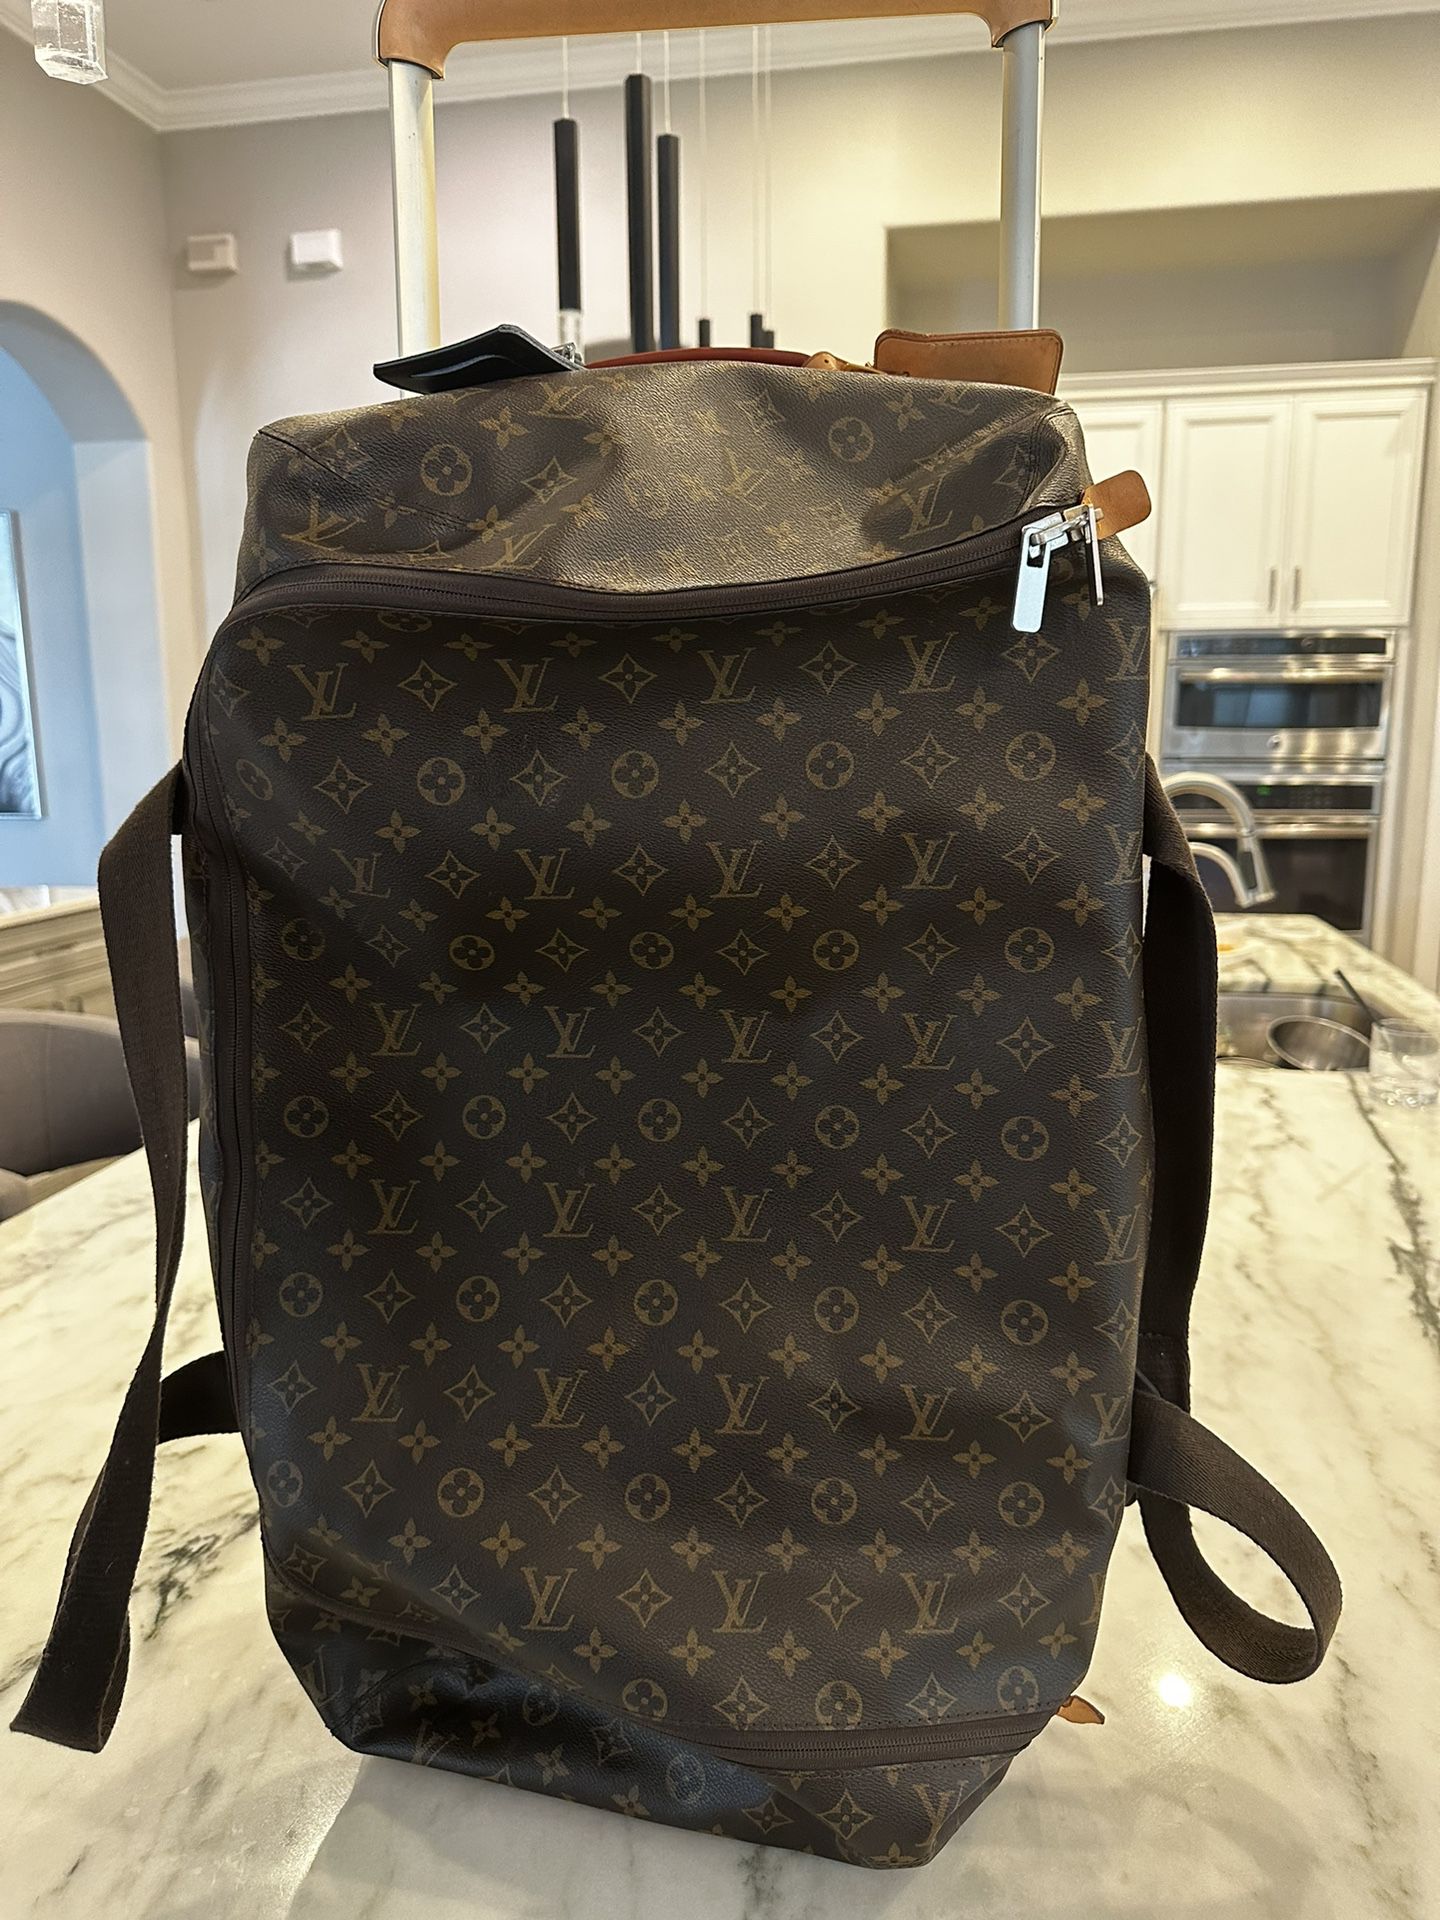 Louis Vuitton Travel Bag for Sale in Bradenton, FL - OfferUp